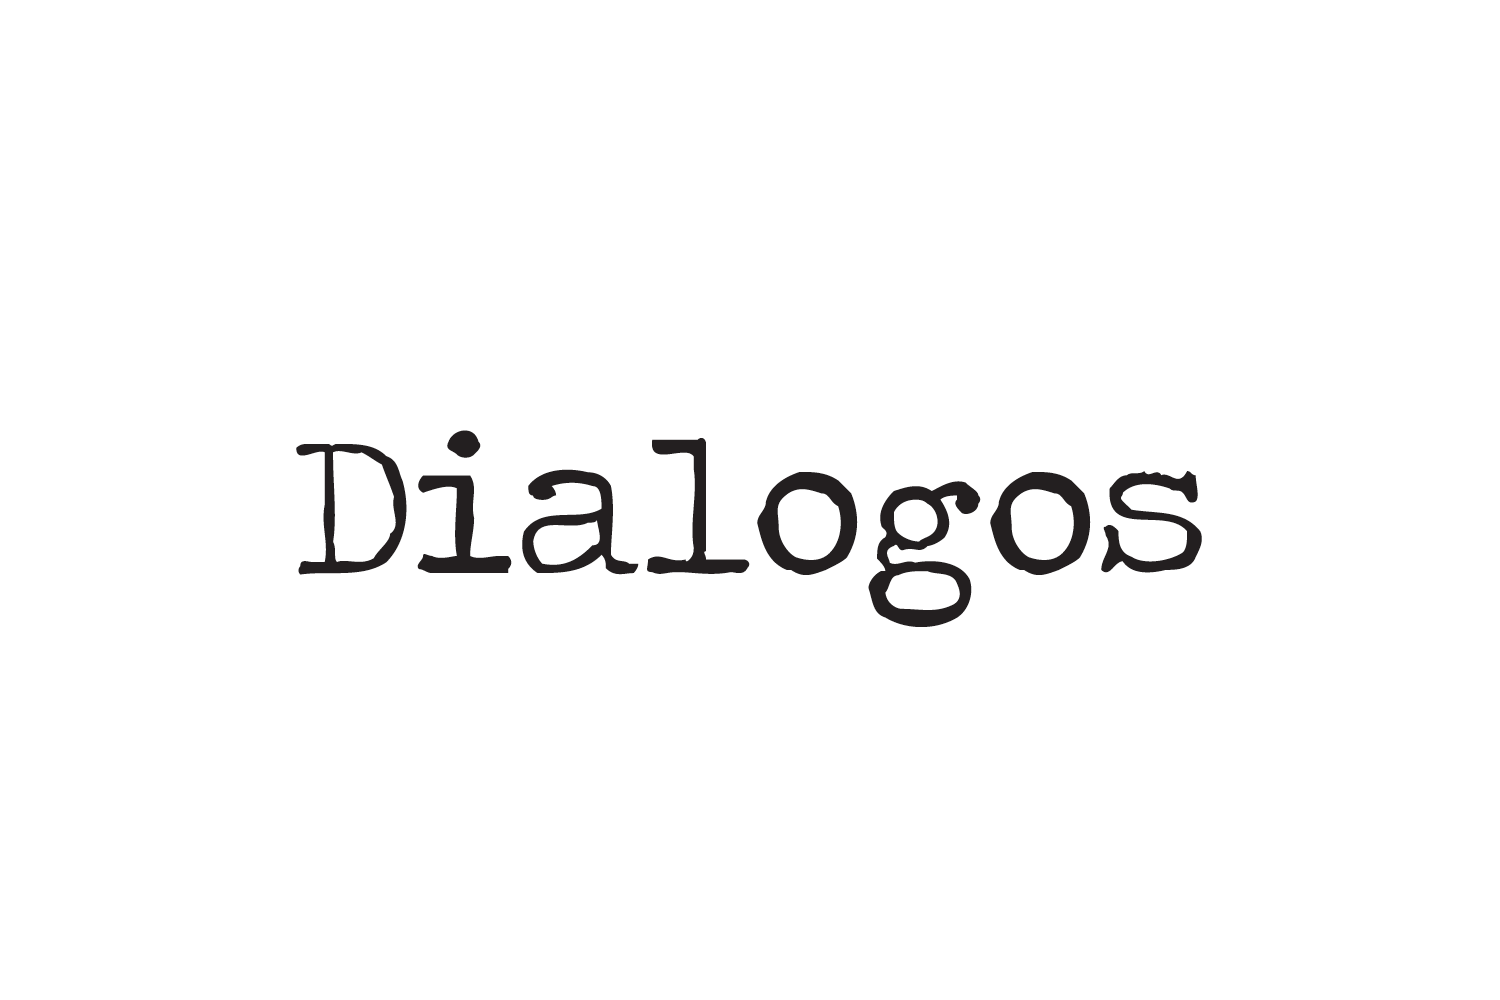 Dialogos: A Public Conference Exploring the Meaning of Dialogue